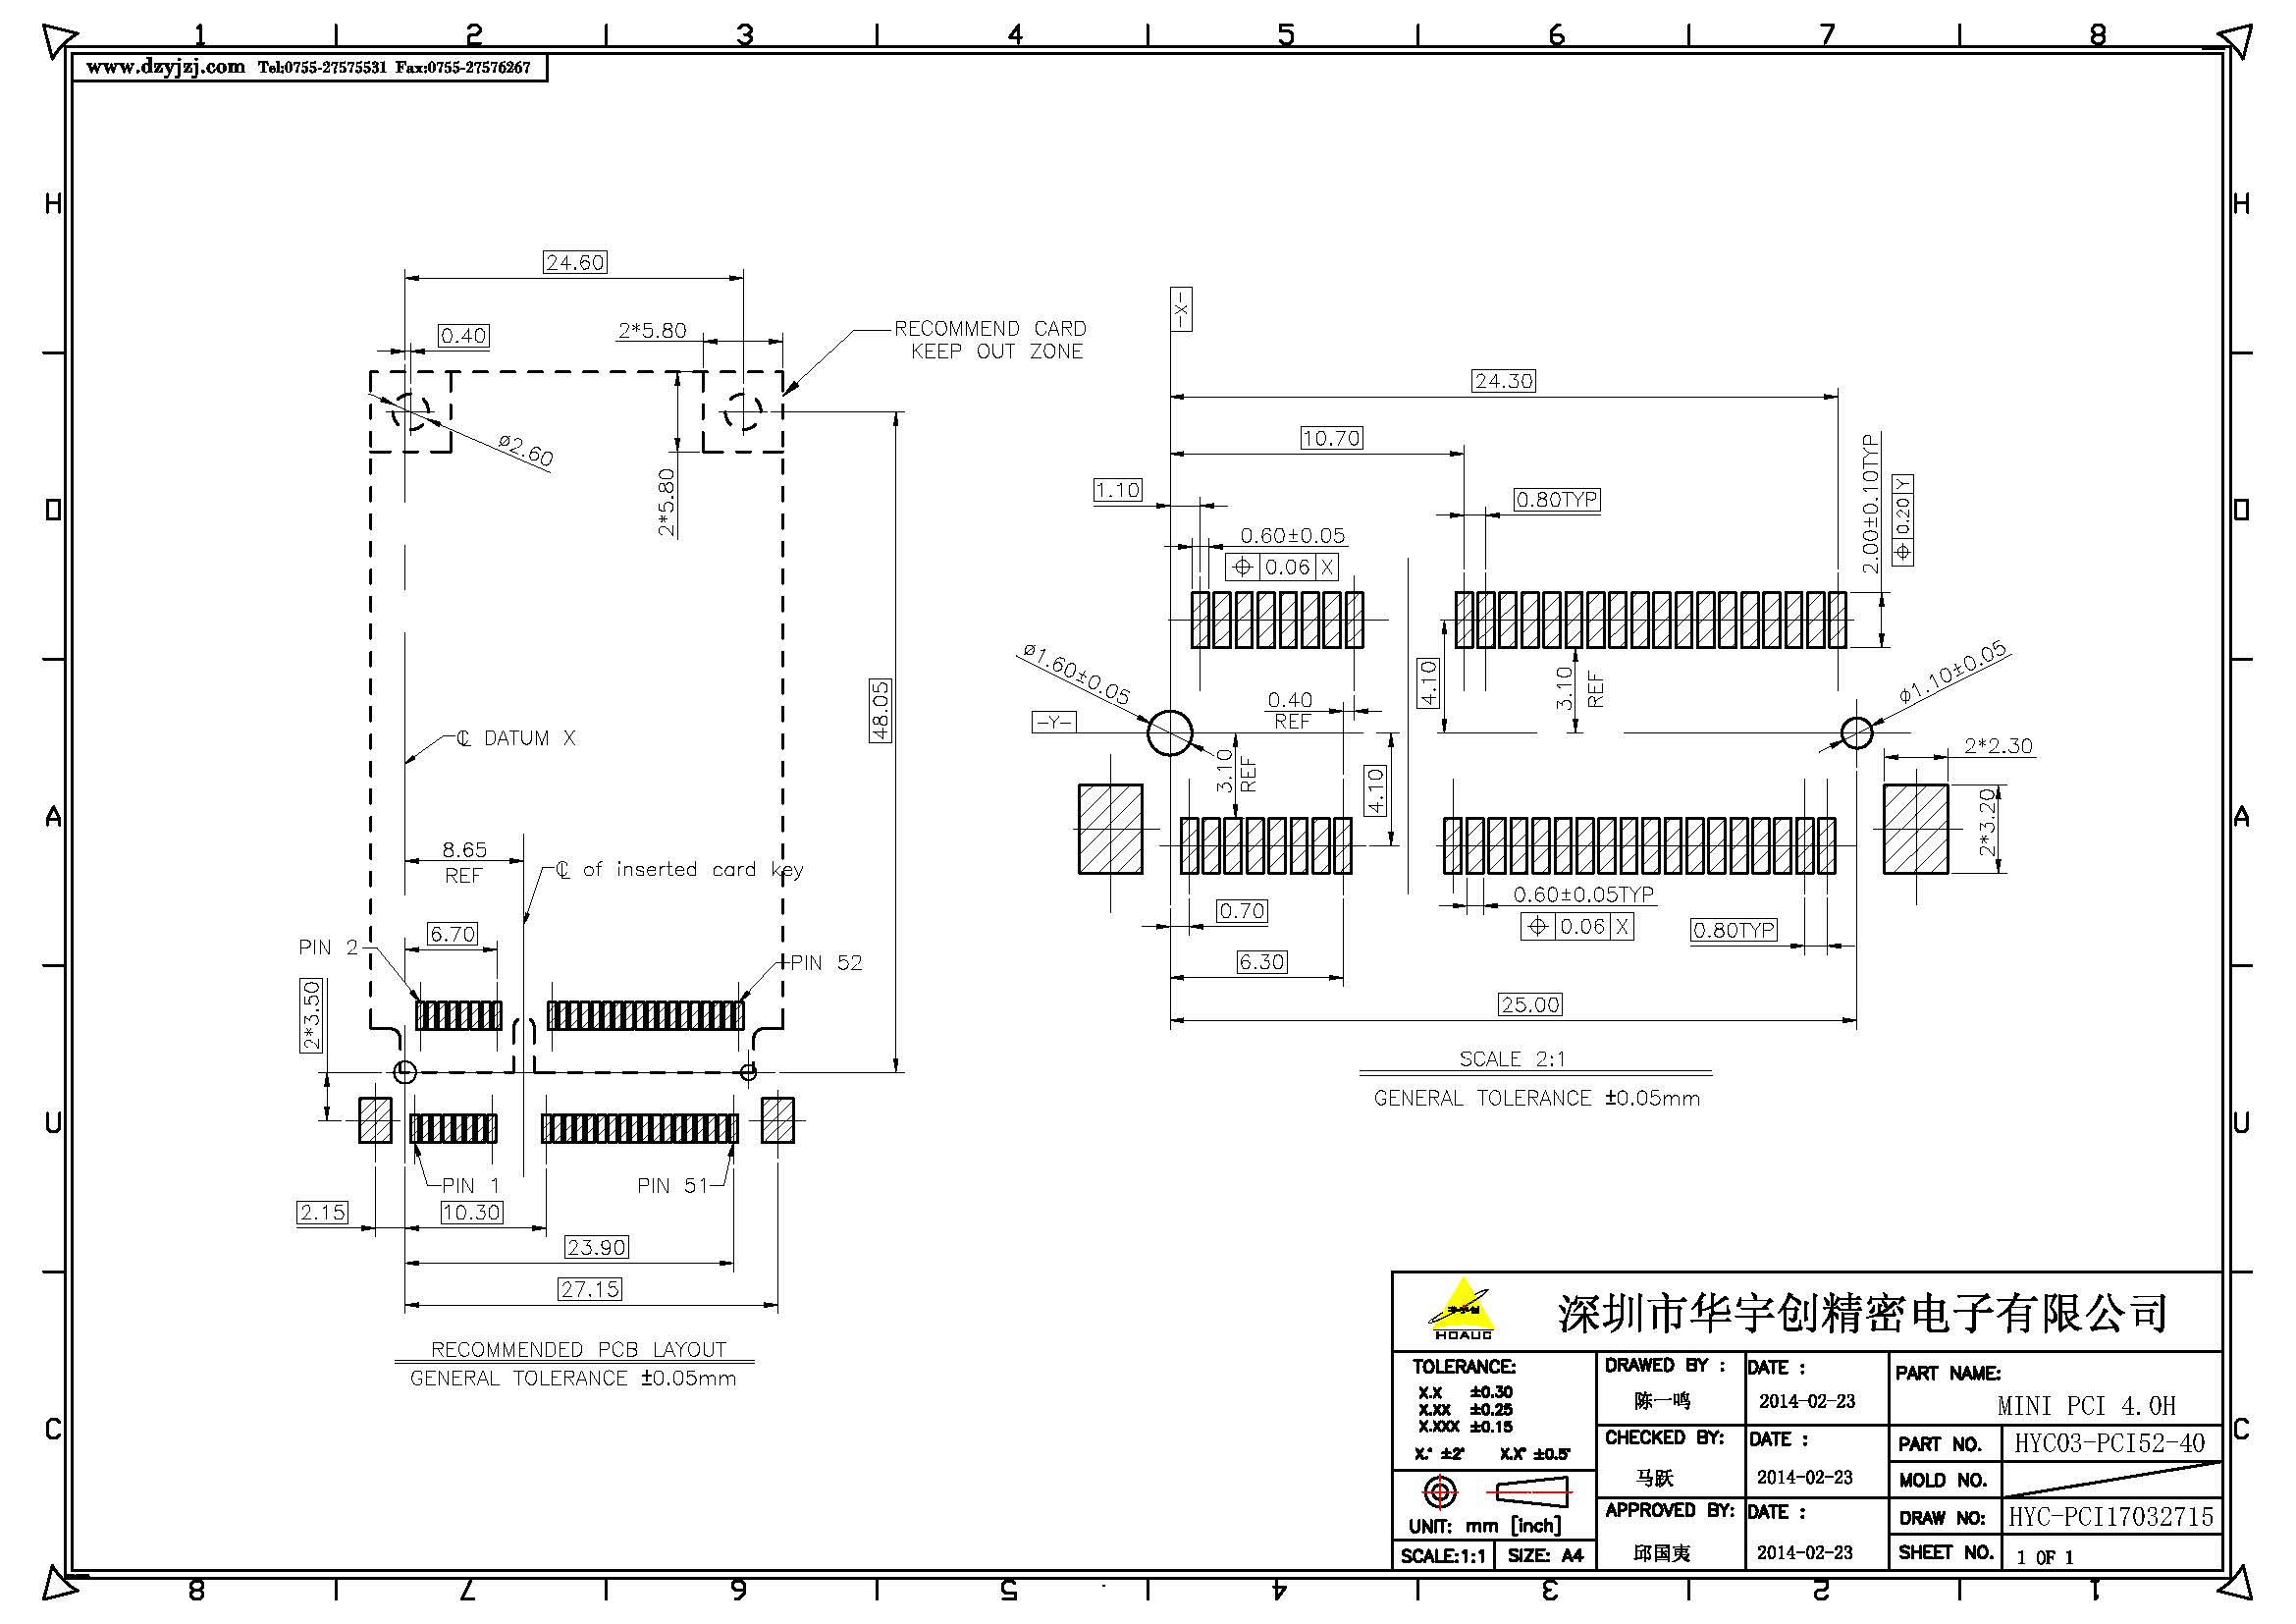 MINI PCI 4.0H产品图_页面_2.jpg